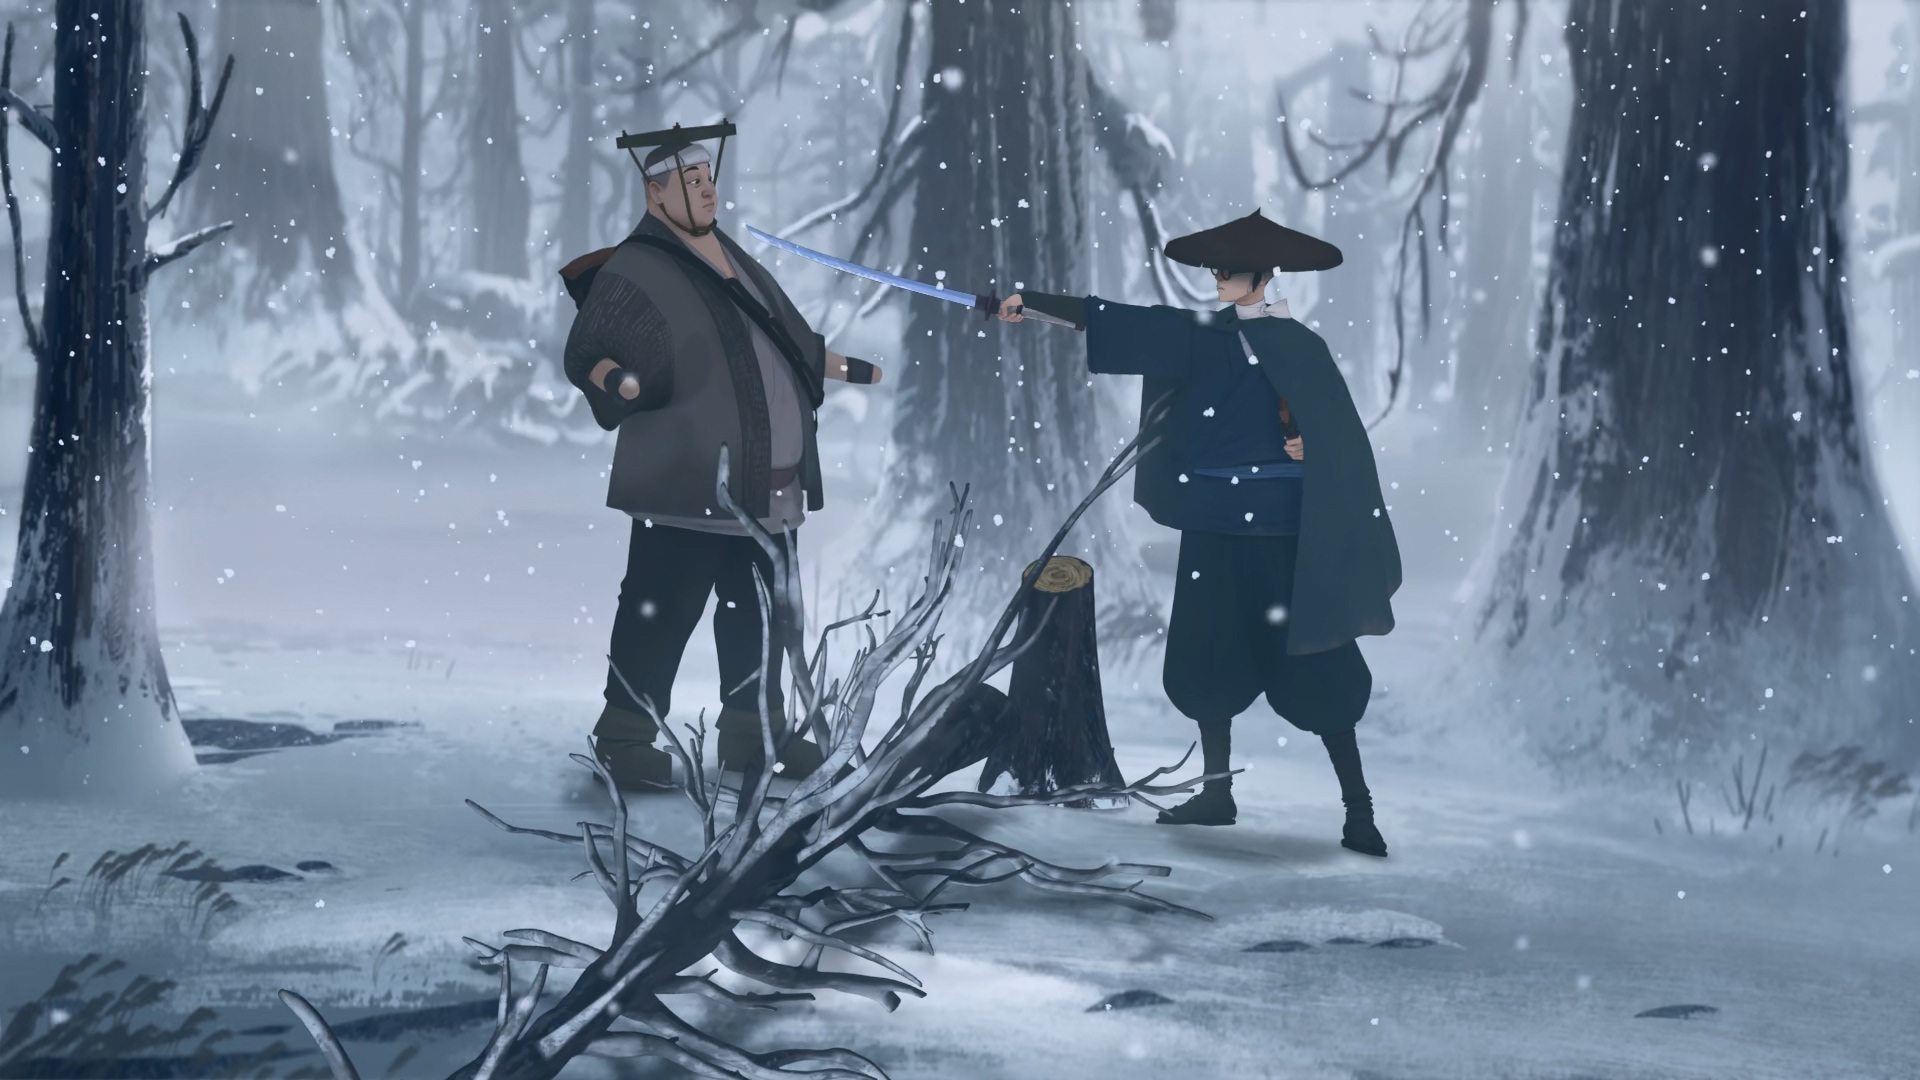 Mizu et Ringo menaçant avec une épée dans l'anime Blue Eye Samurai